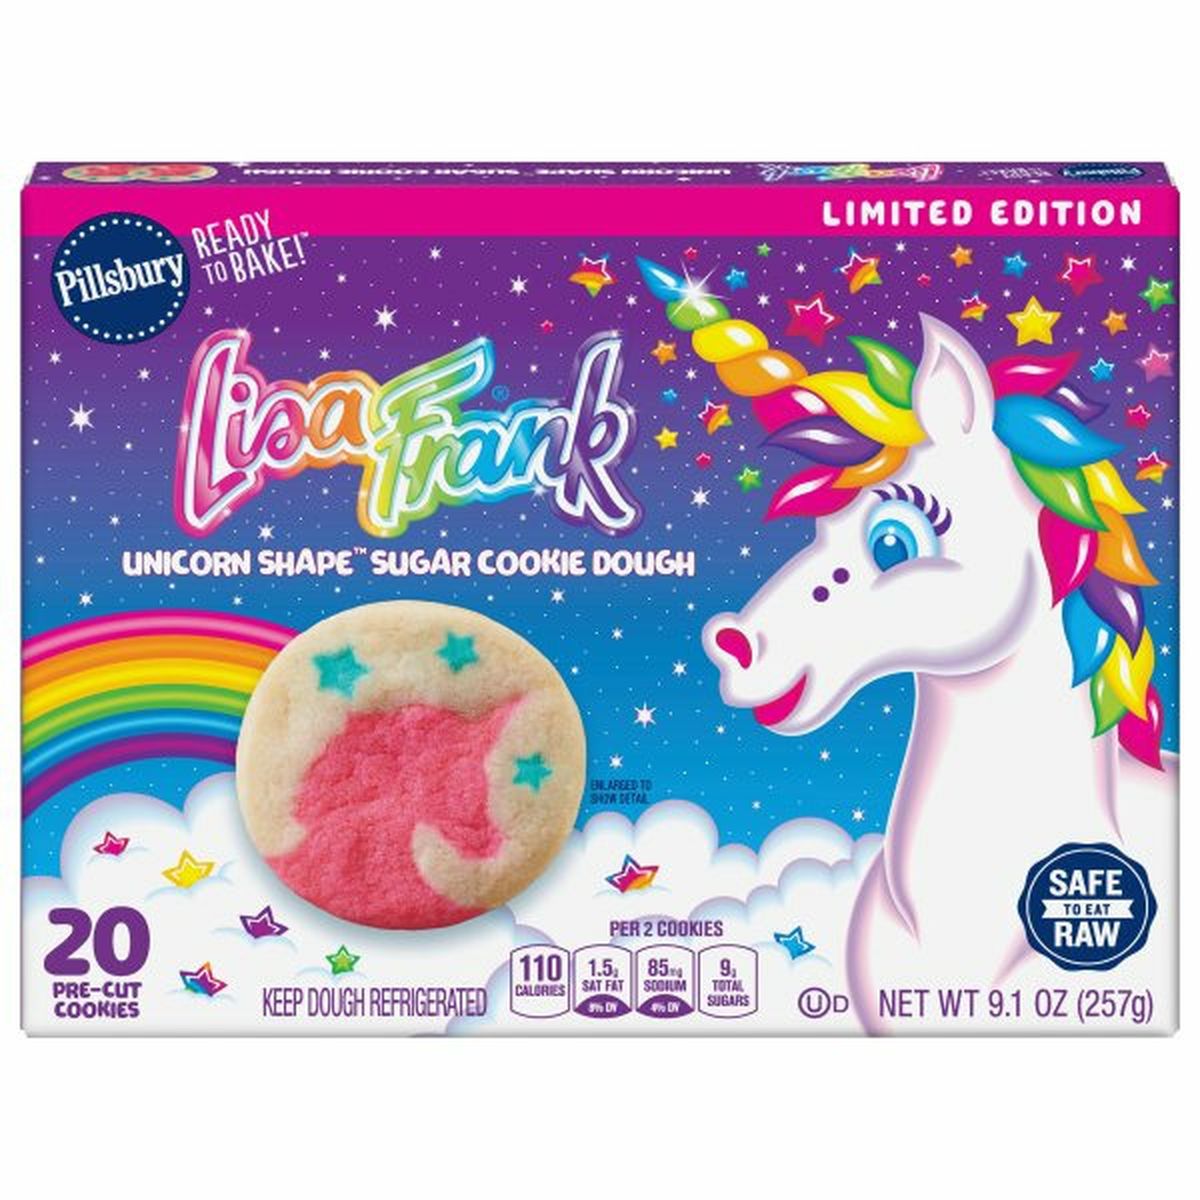 Calories in Pillsbury Lisa Frank Sugar Cookie Dough, Unicorn Shape